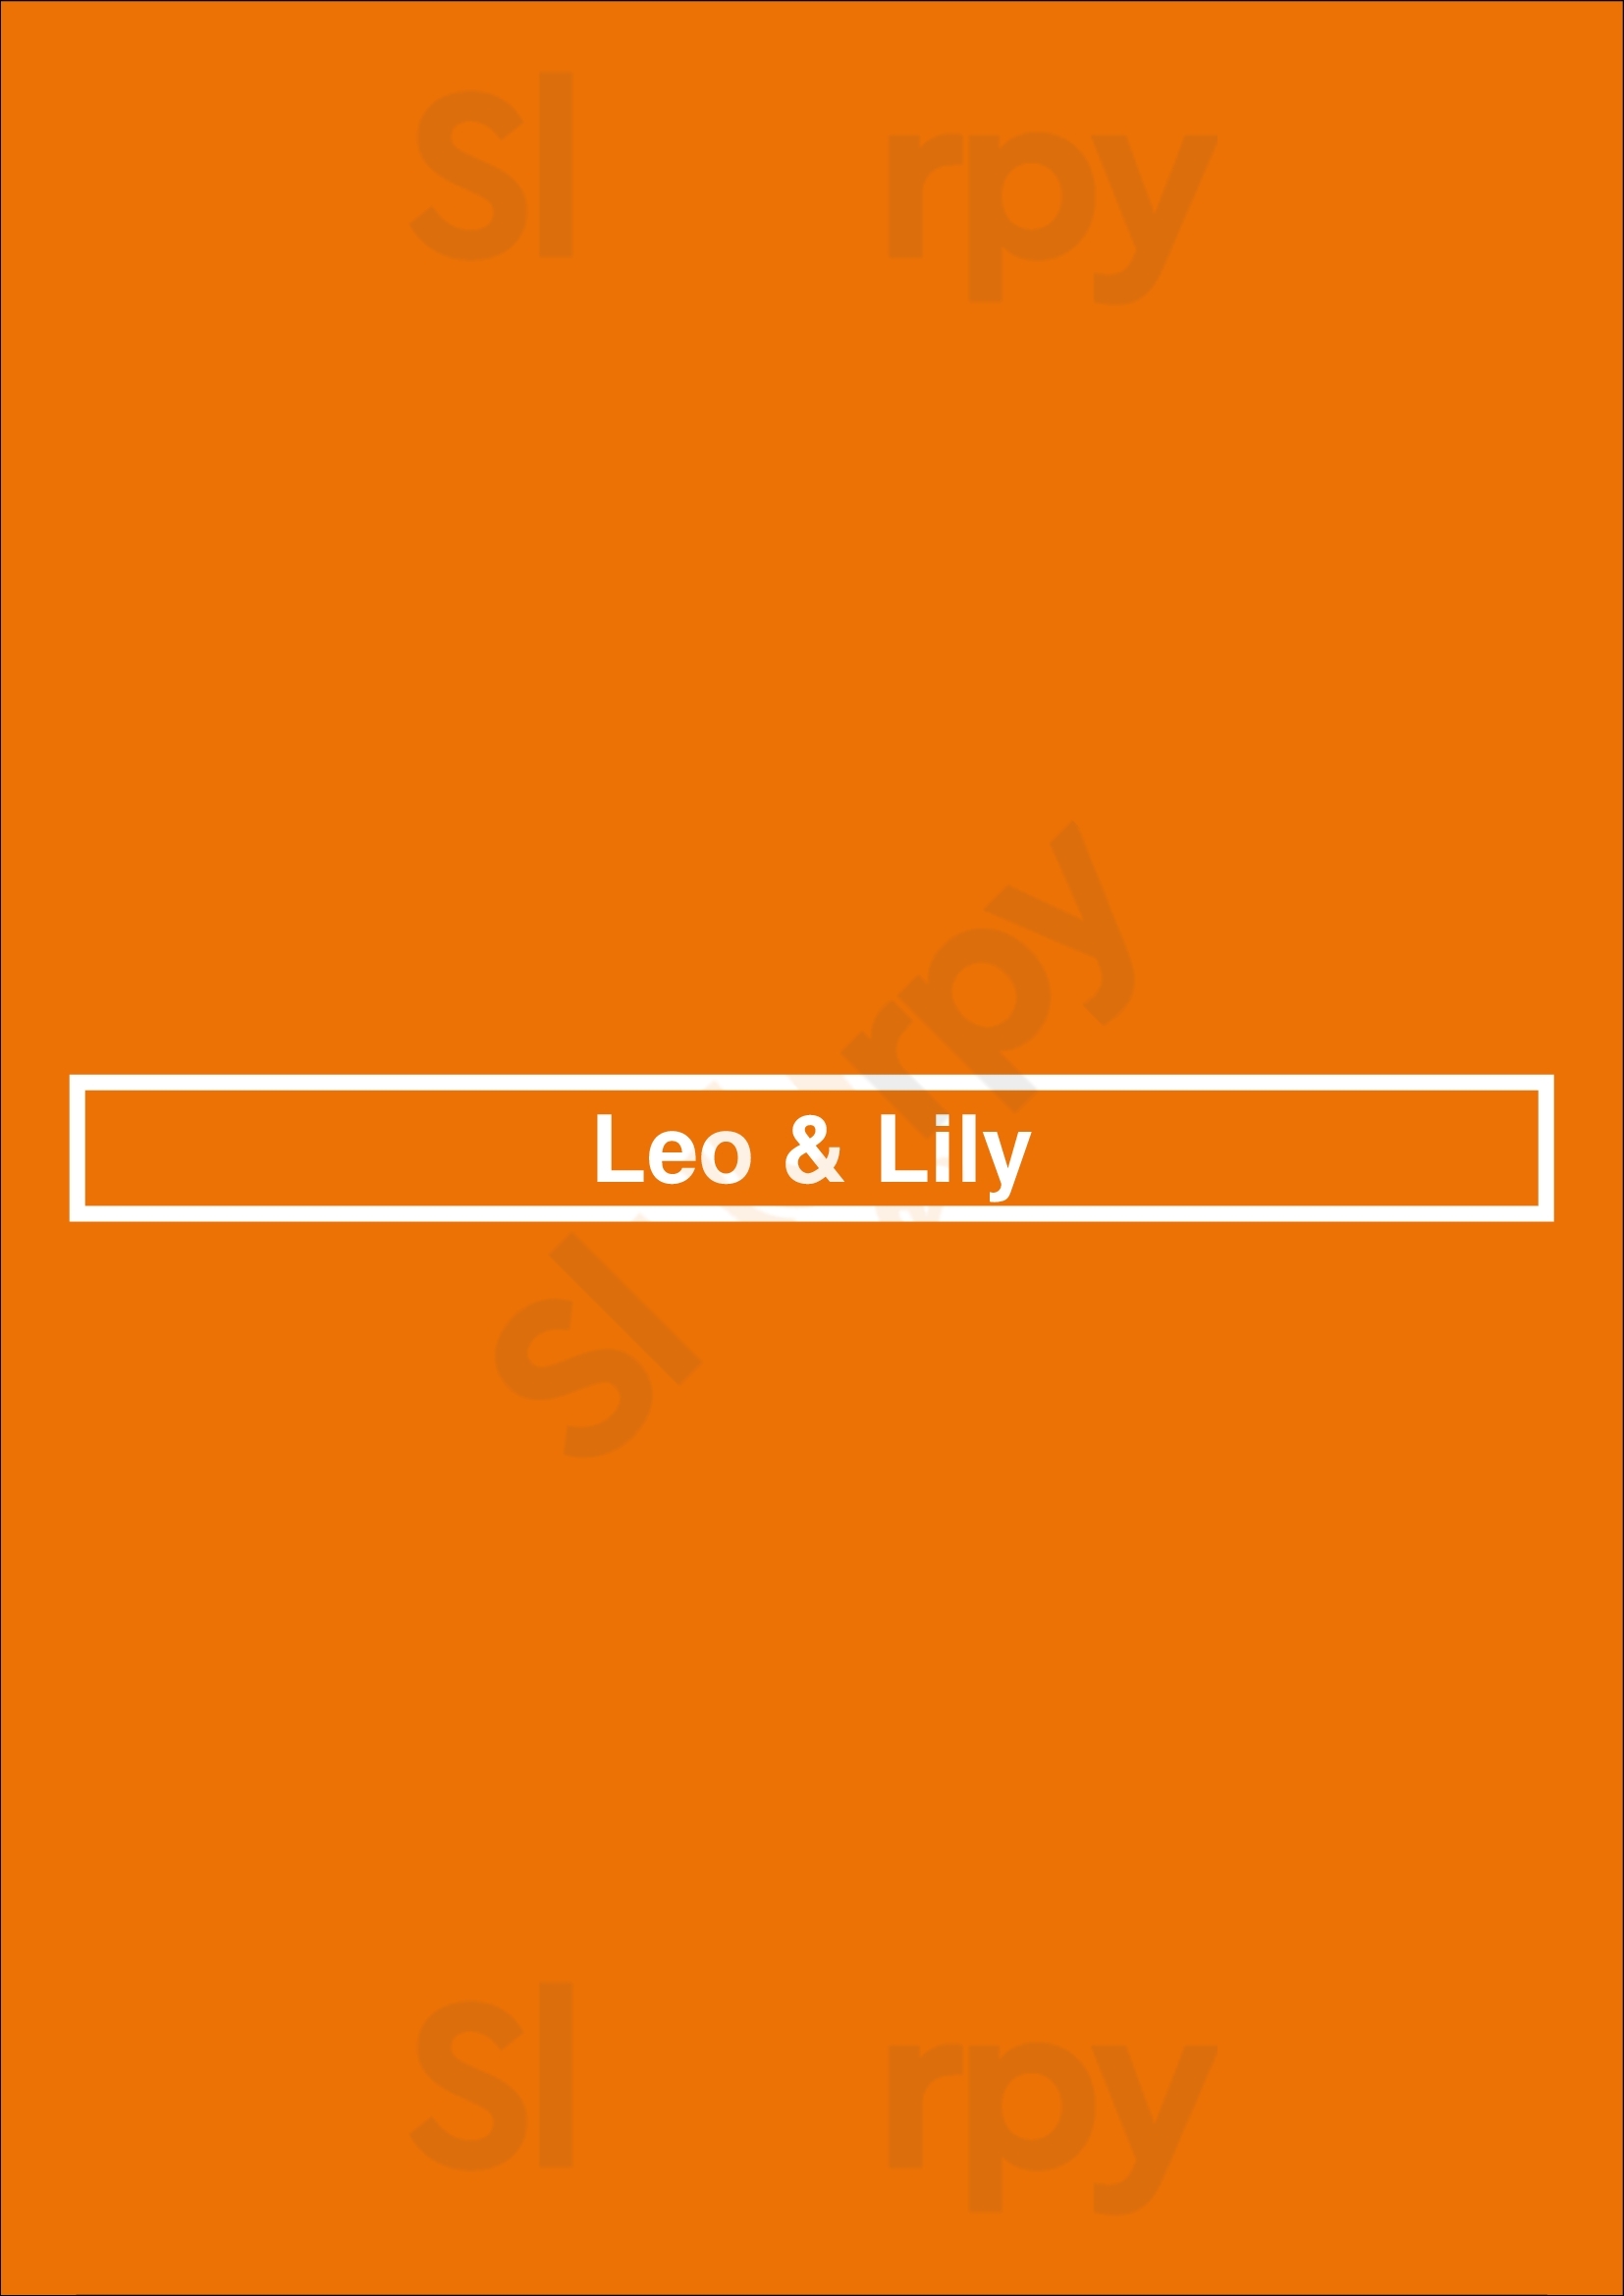 Leo & Lily Los Angeles Menu - 1